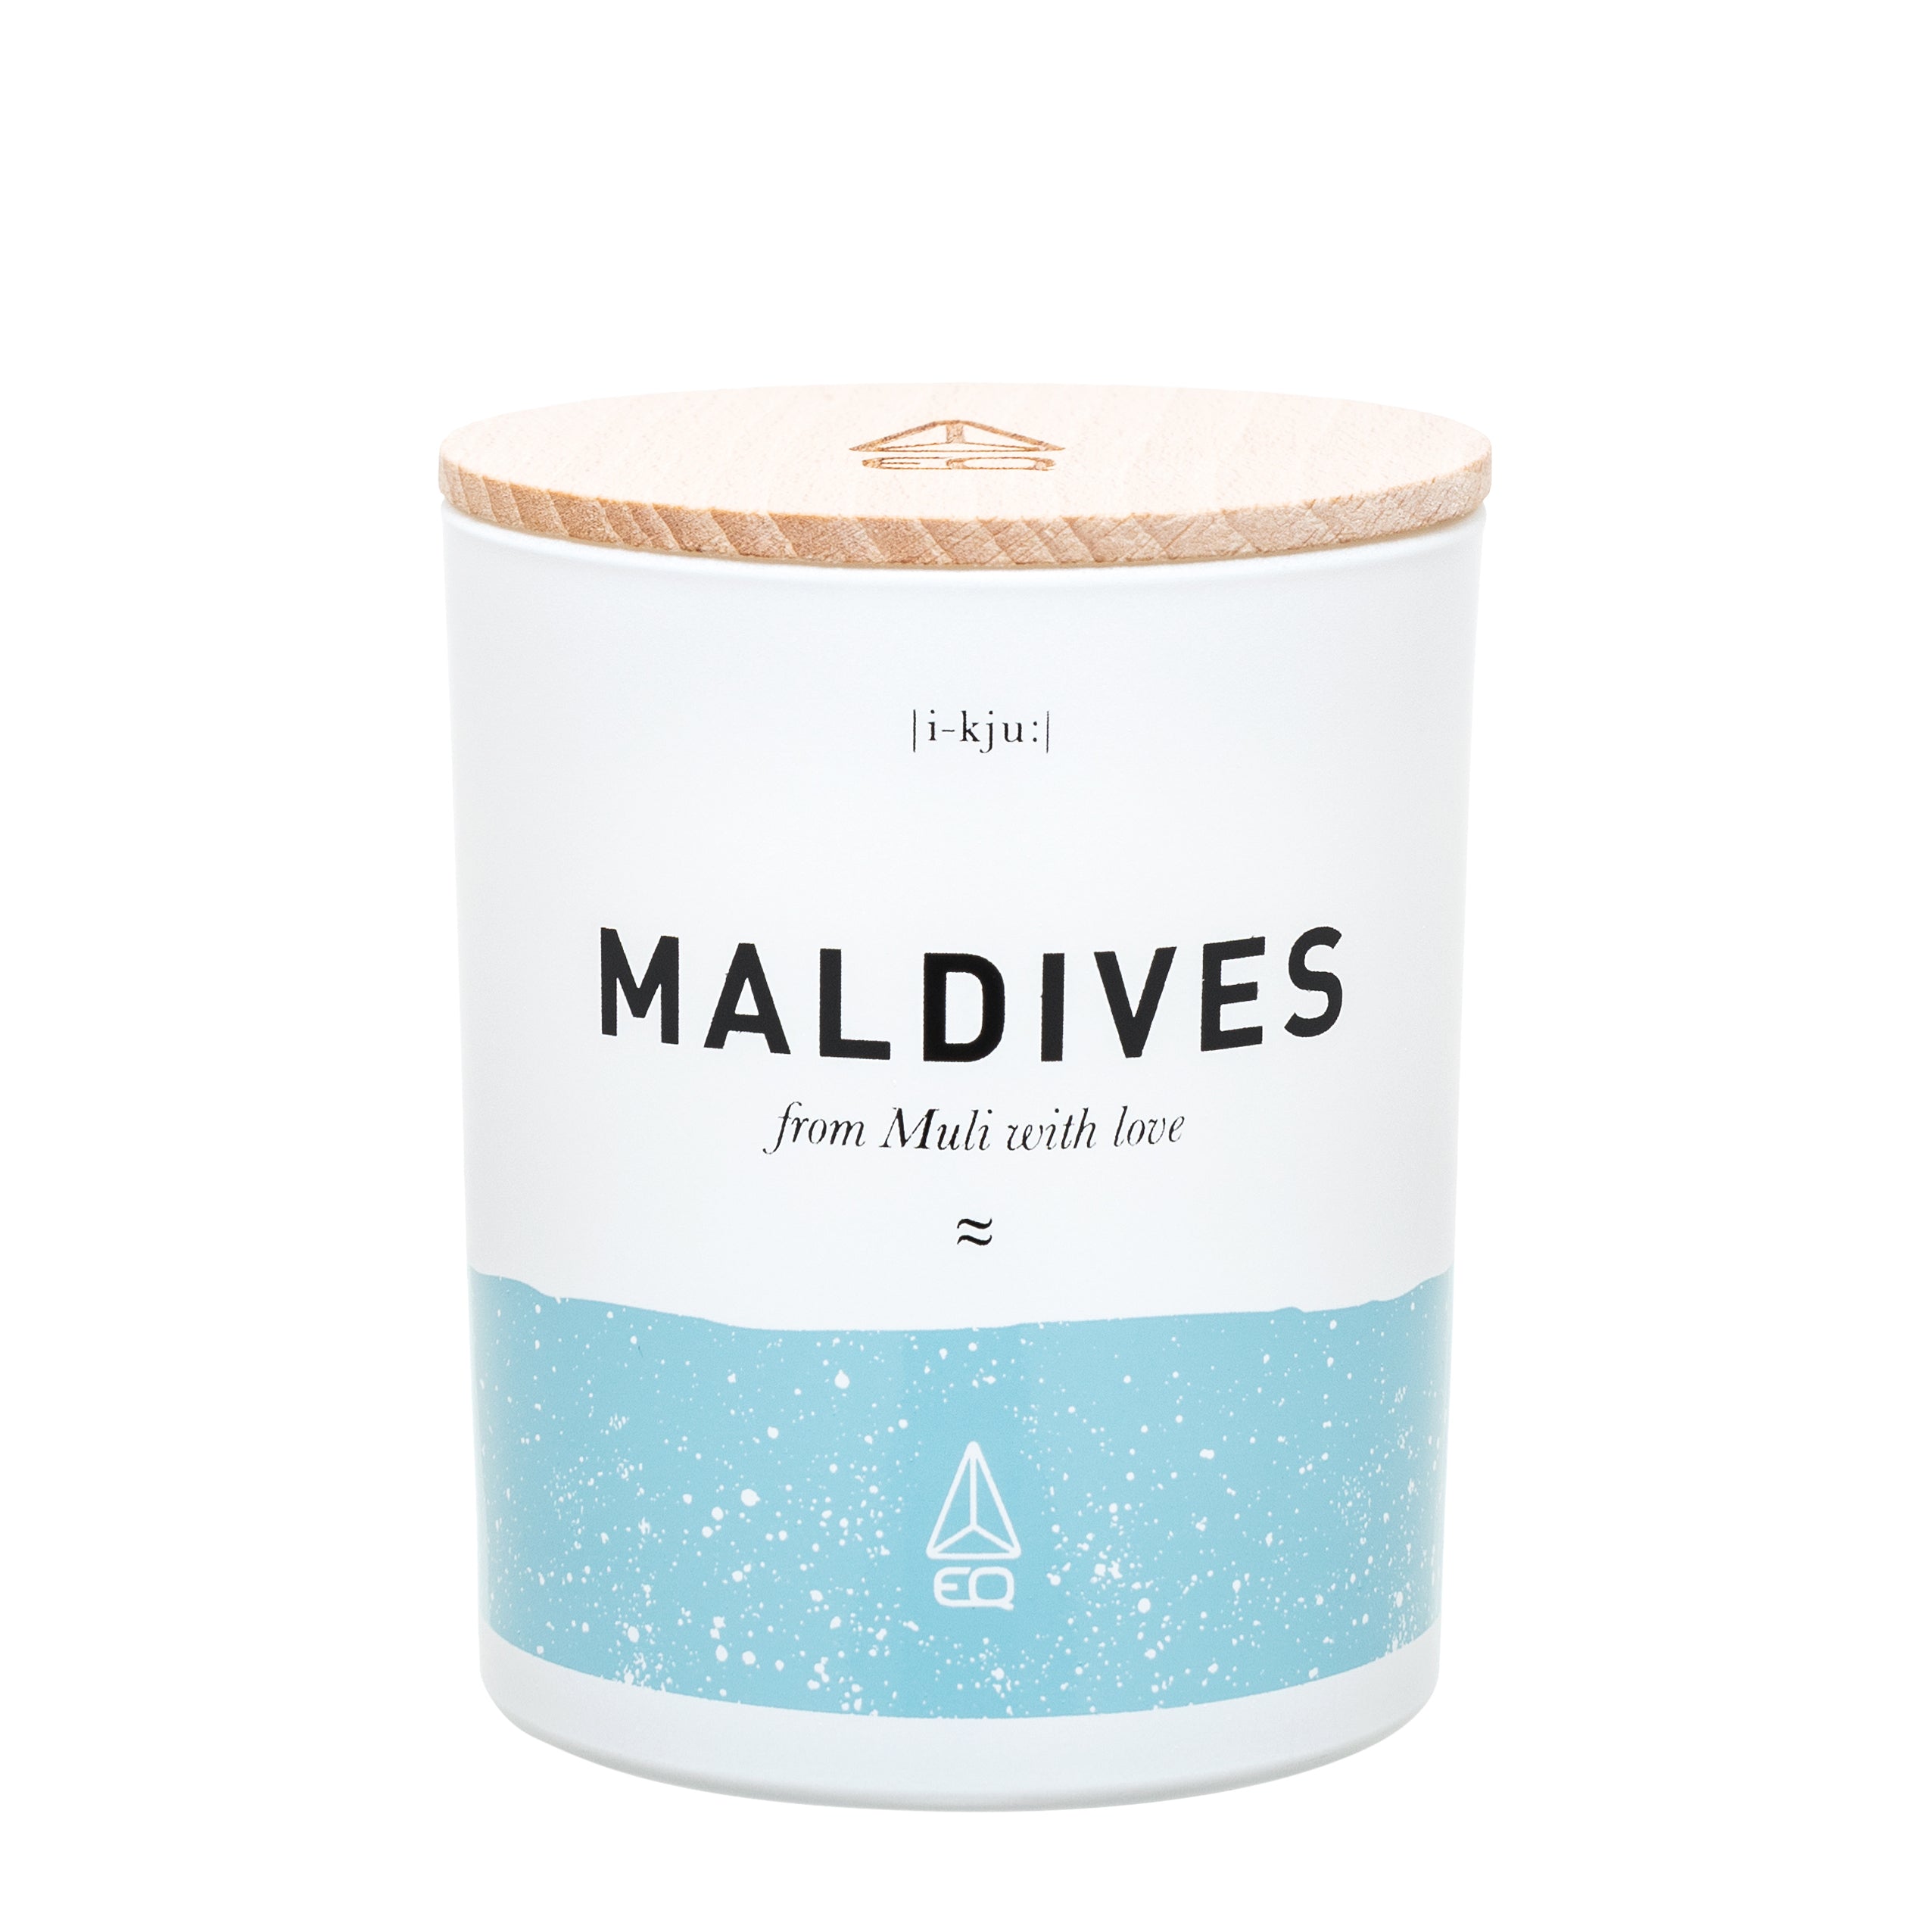 Maldives - Vanille, Gaïac-Holz, Weißer Moschus, Ylang Ylang & Tiare-Blume